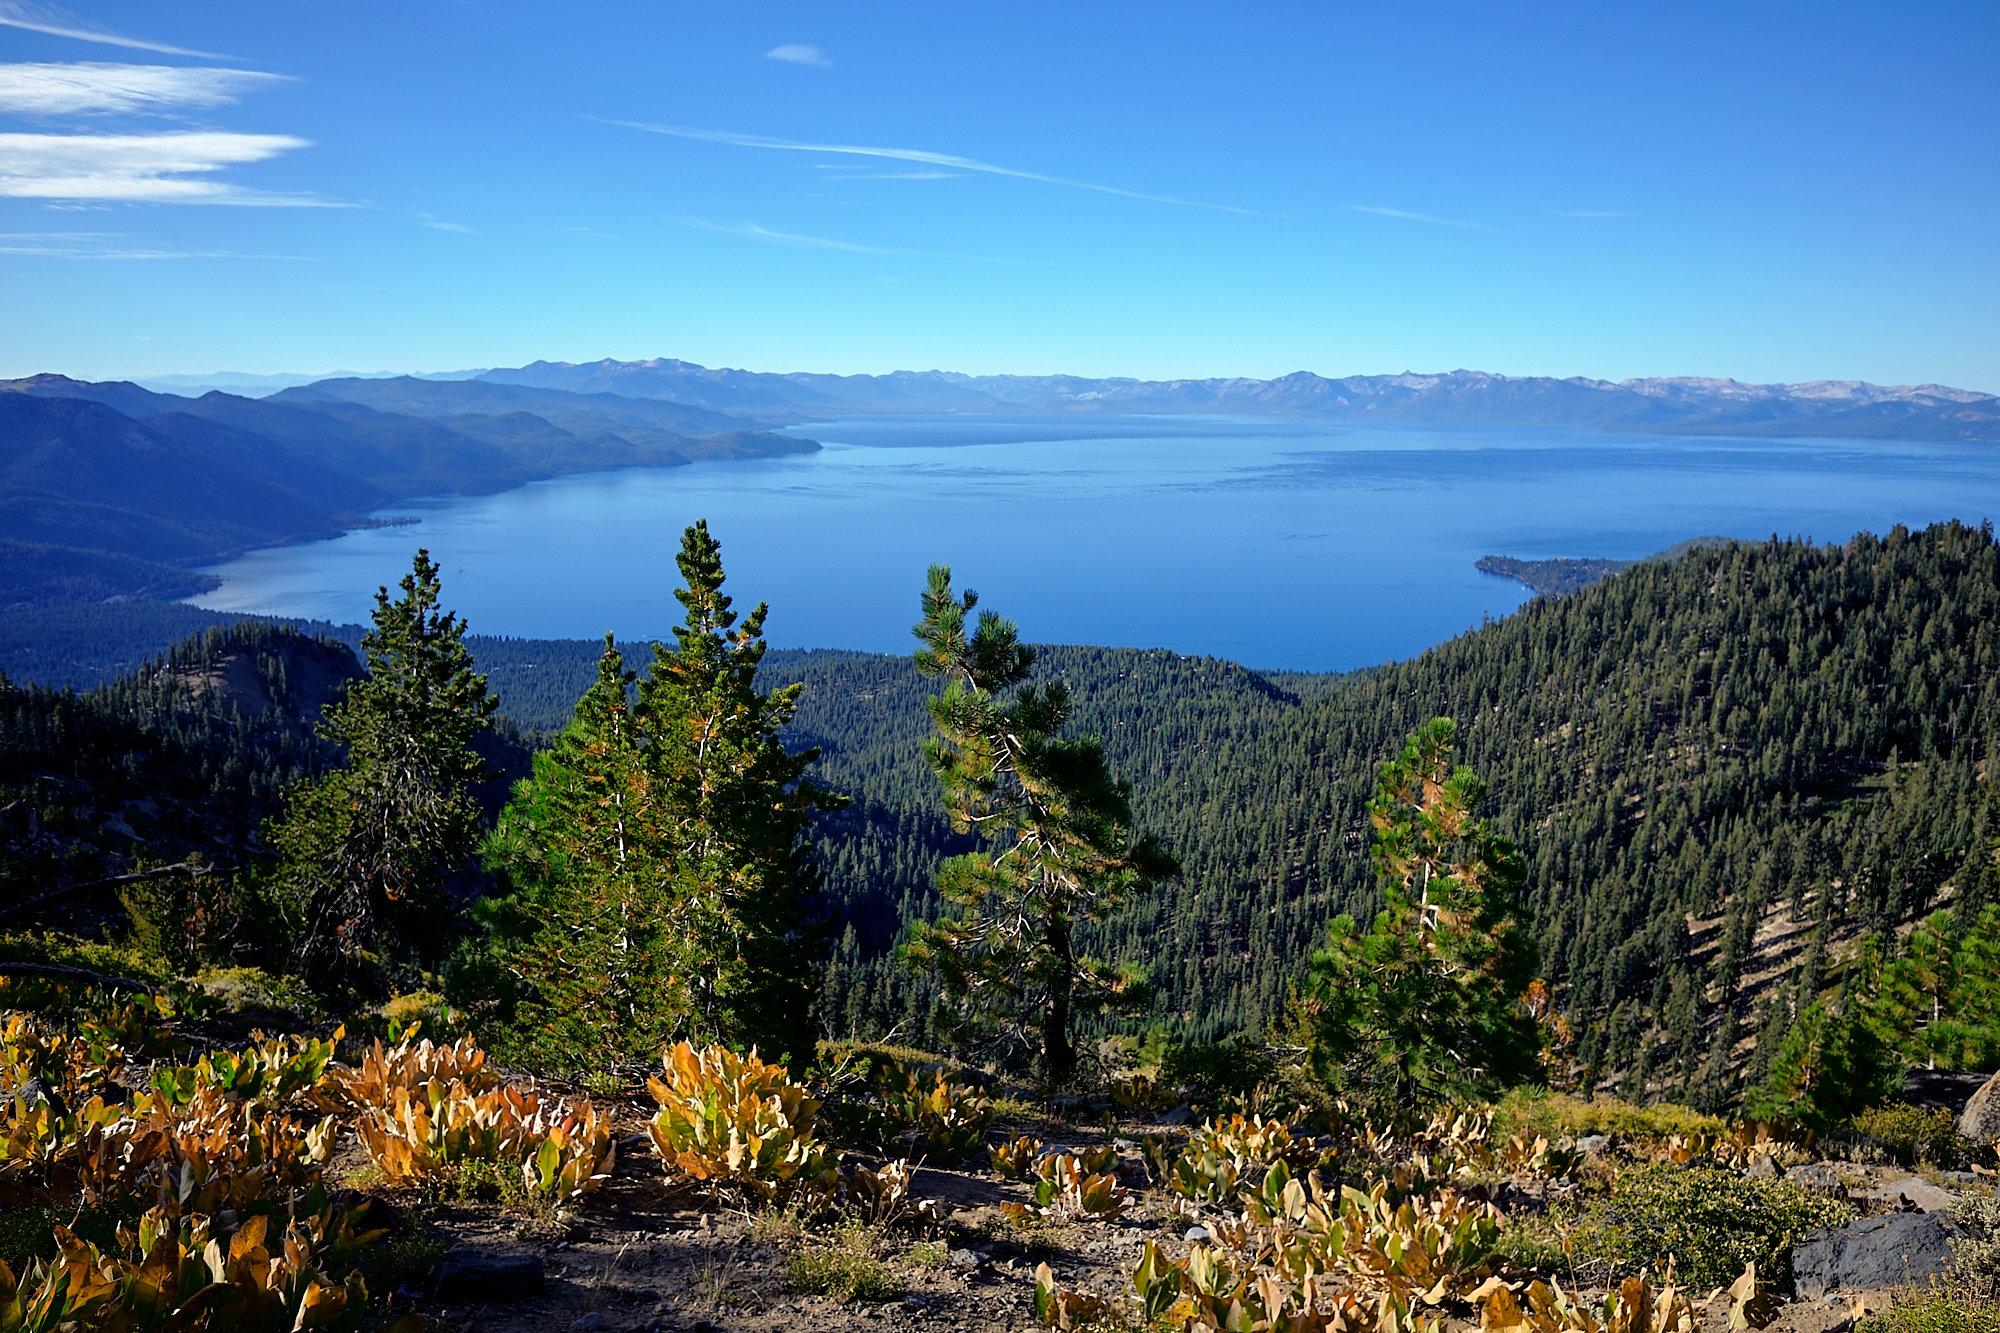  Views of Lake Tahoe from the Tahoe Rim Trail. | Lake Tahoe, CA 9/8/18 